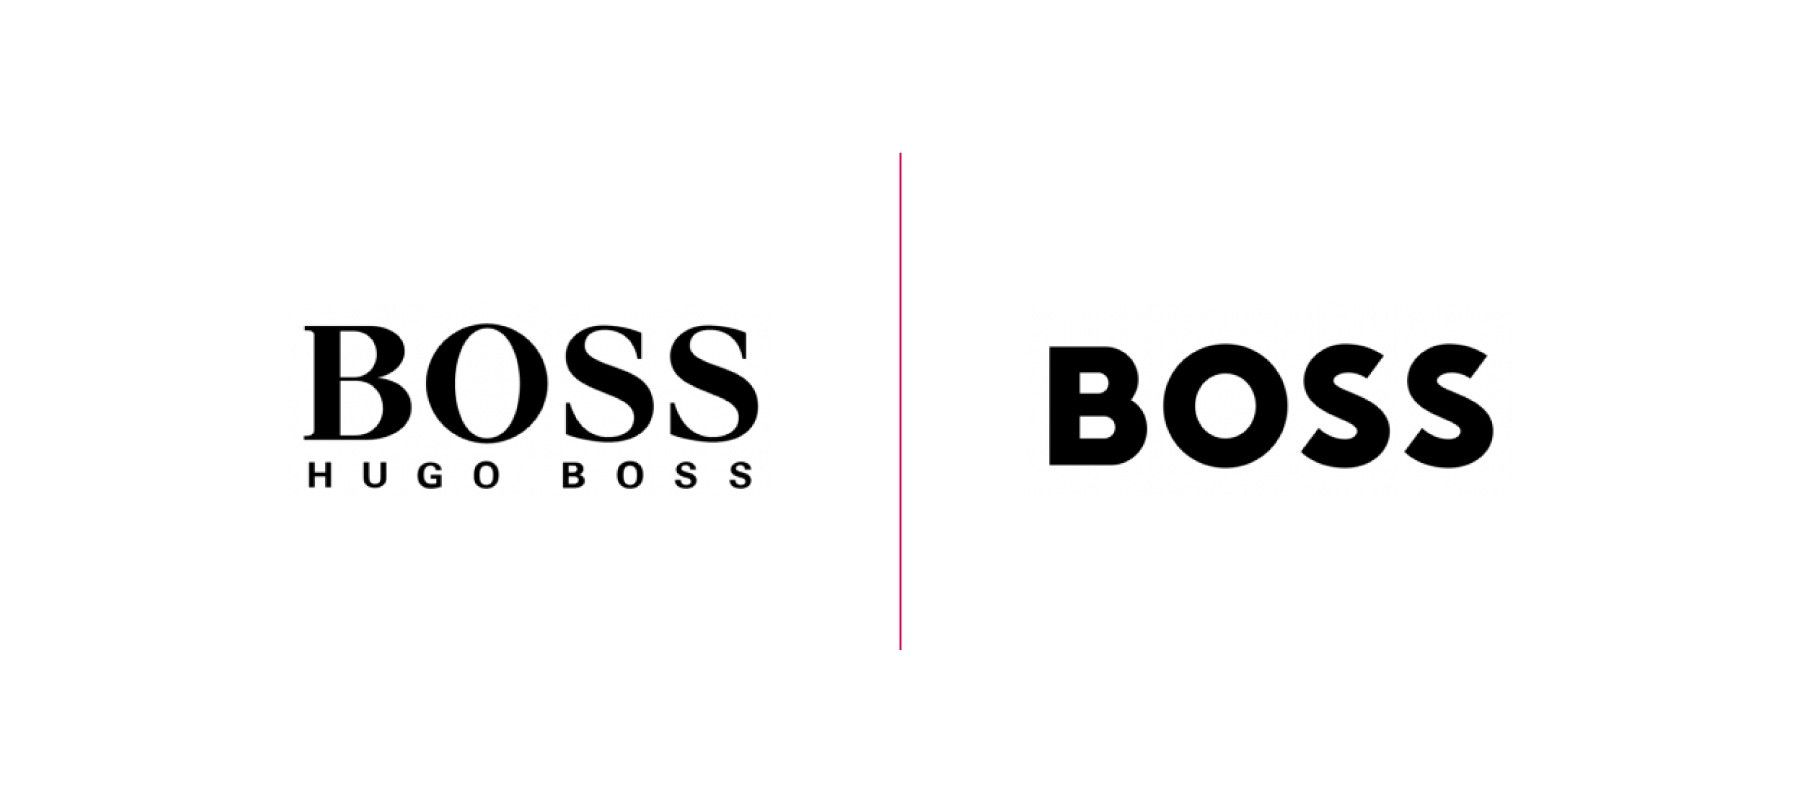 Hugo Boss: influencer protagonisti del rebranding - Mentarossa ...